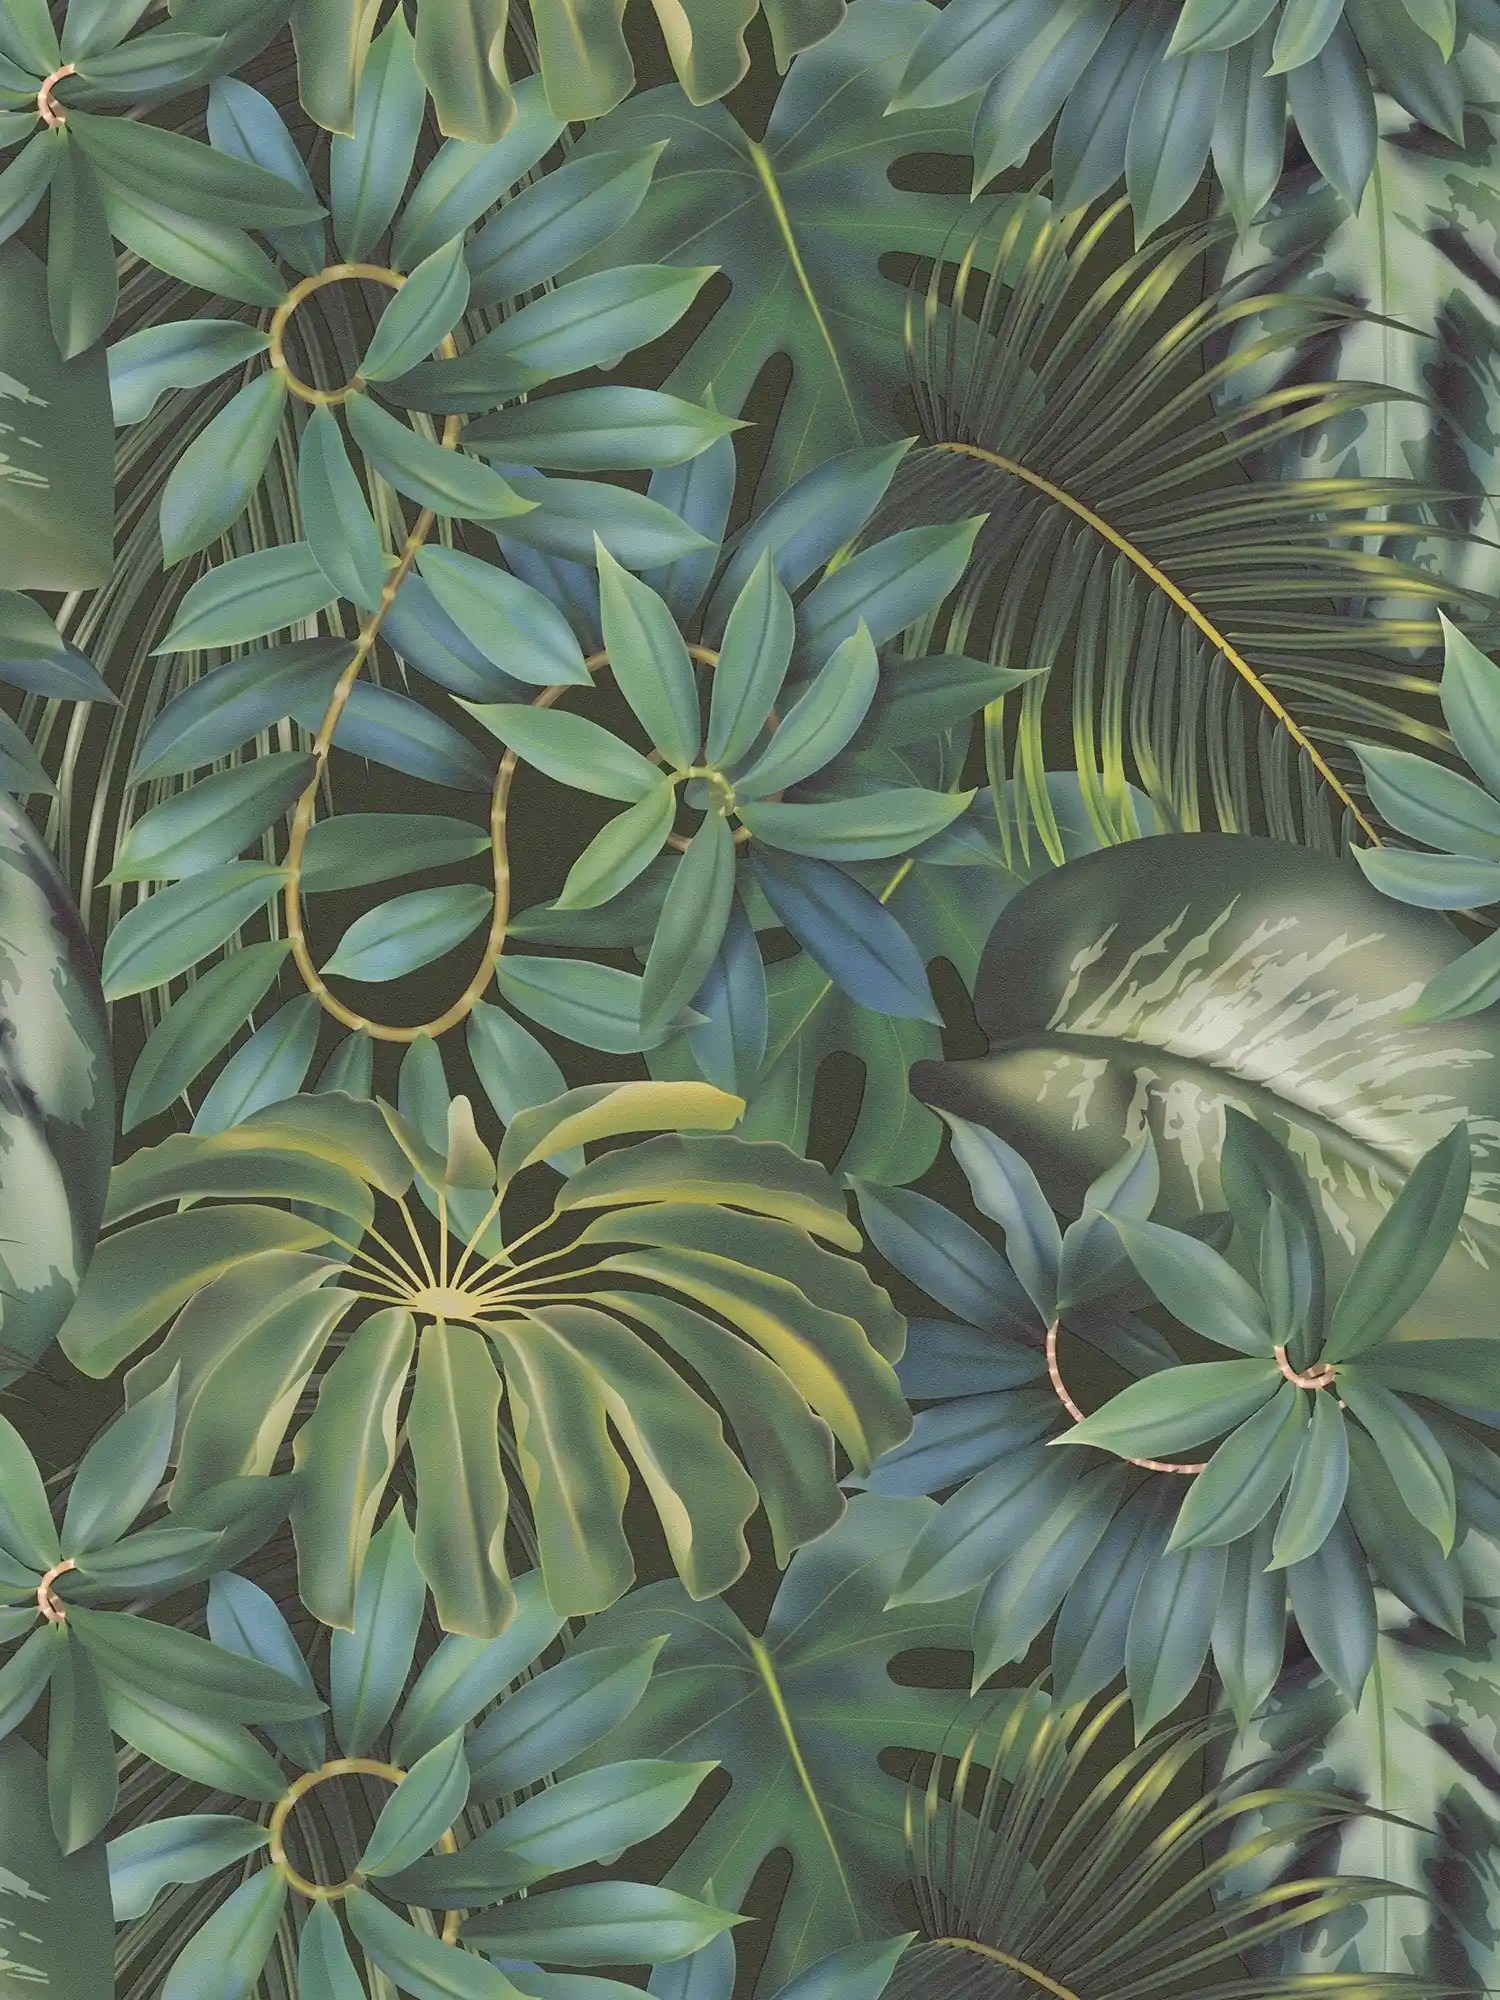 Leaves wallpaper jungle pattern - green, black
